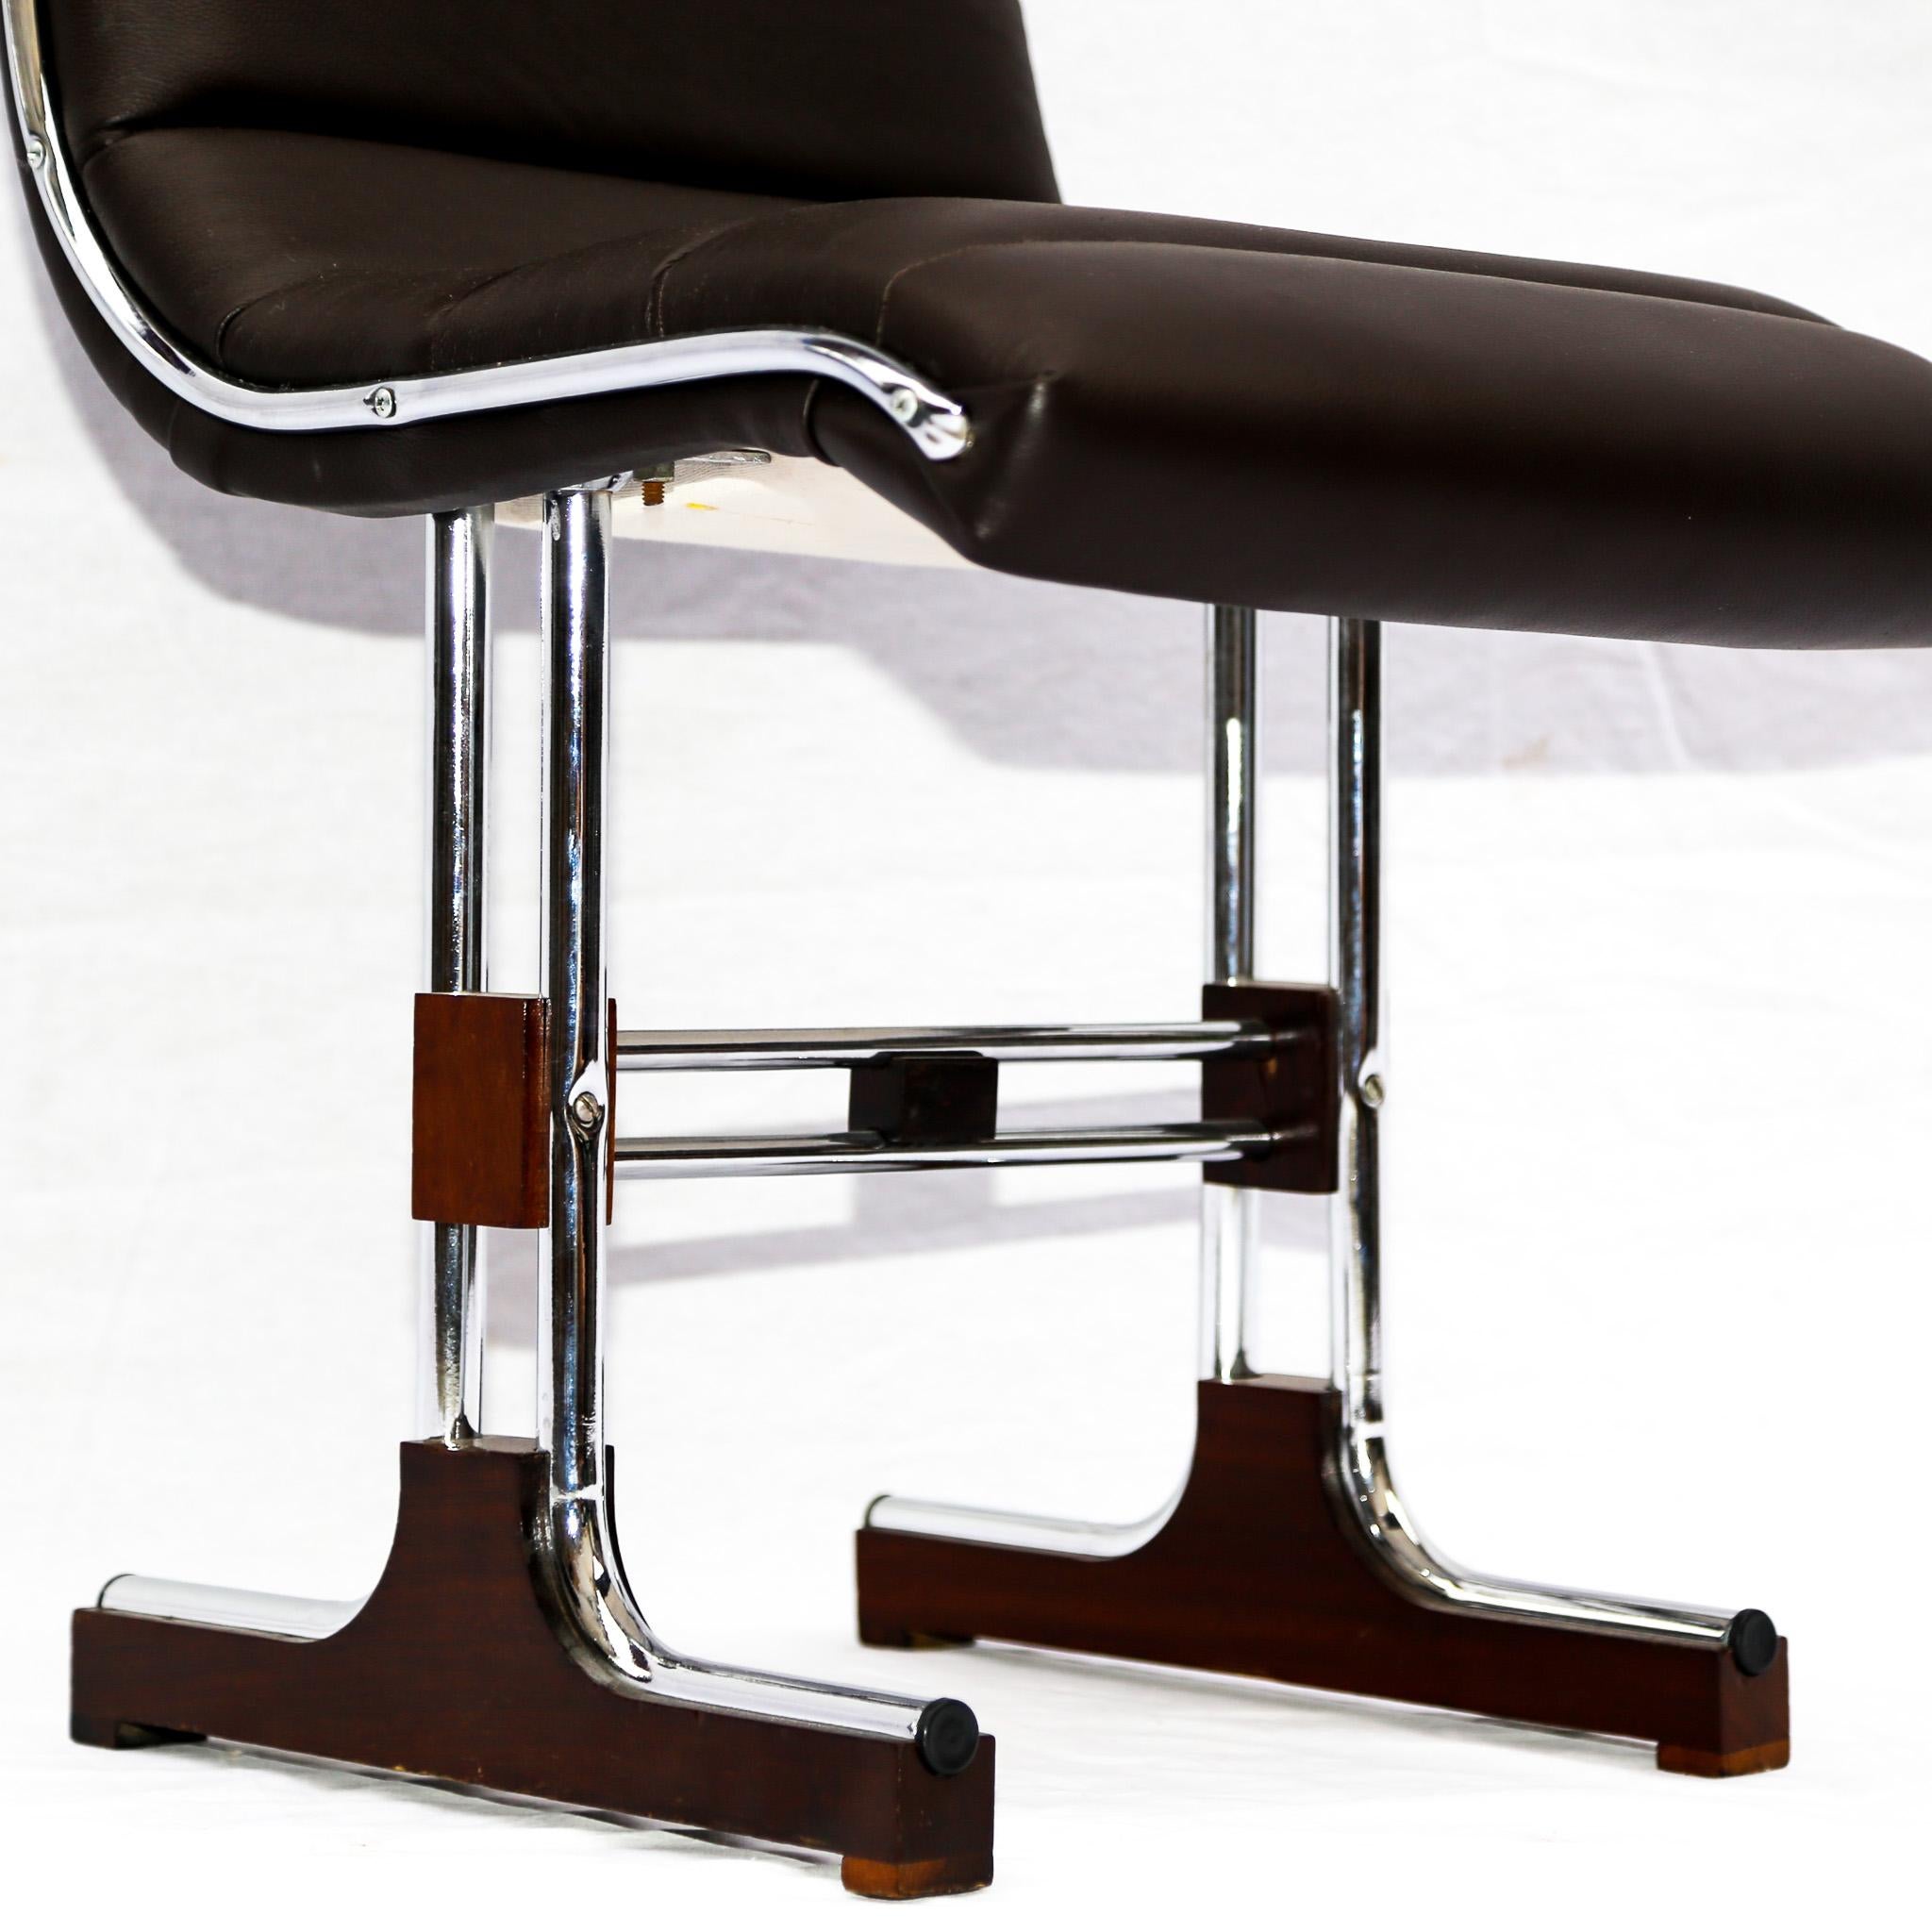 Brazilian Modern Chair Set in Leather, Chrome and Hardwood, by Braszenski, 1970s For Sale 1